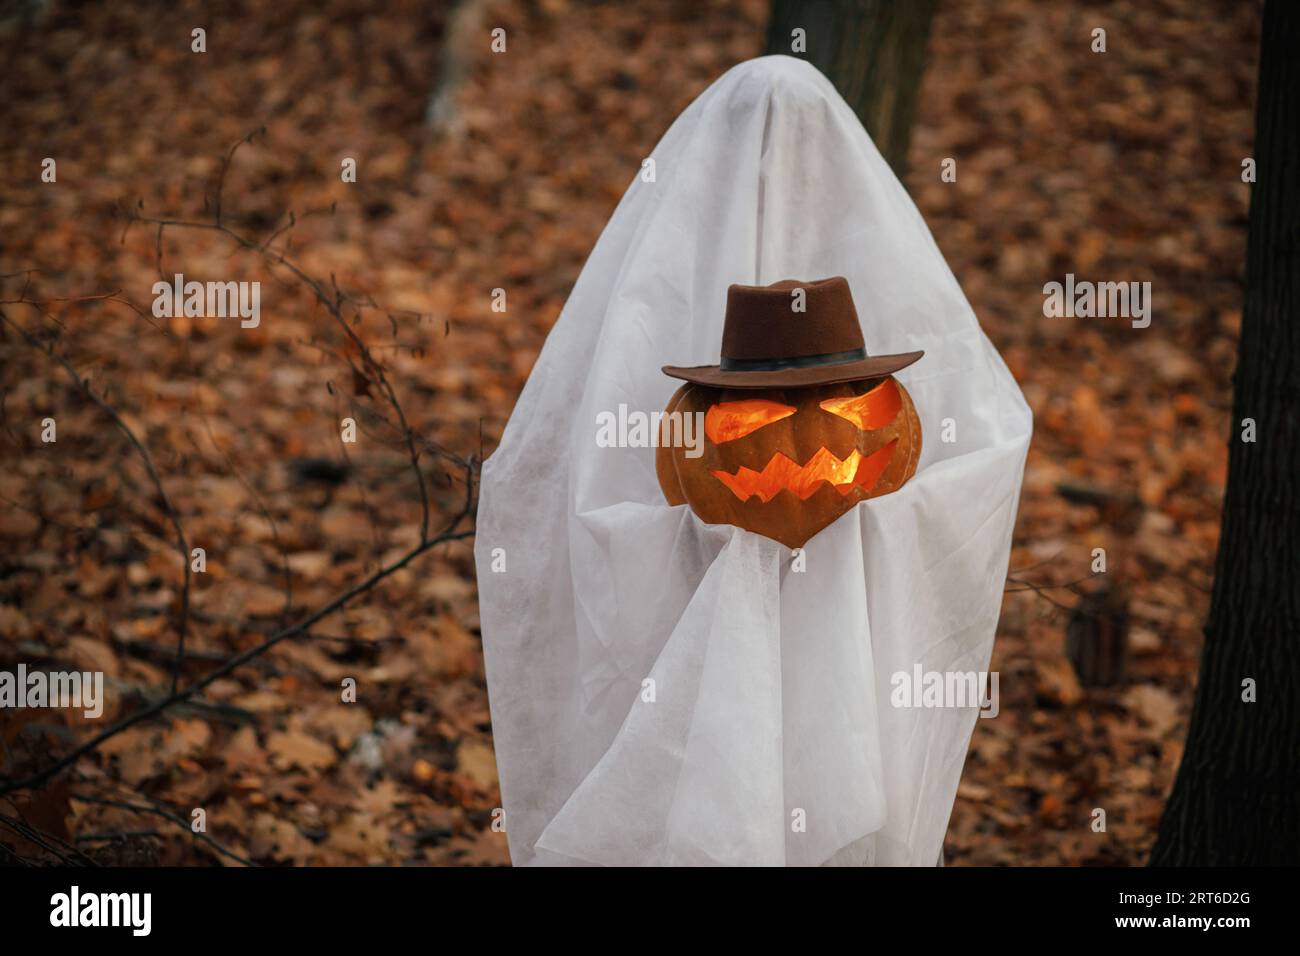 Creativo disfraz de halloween para un adulto un fantasma de una sábana  blanca con gafas de sol negras bailando en un campo de otoño concepto de  truco o trato